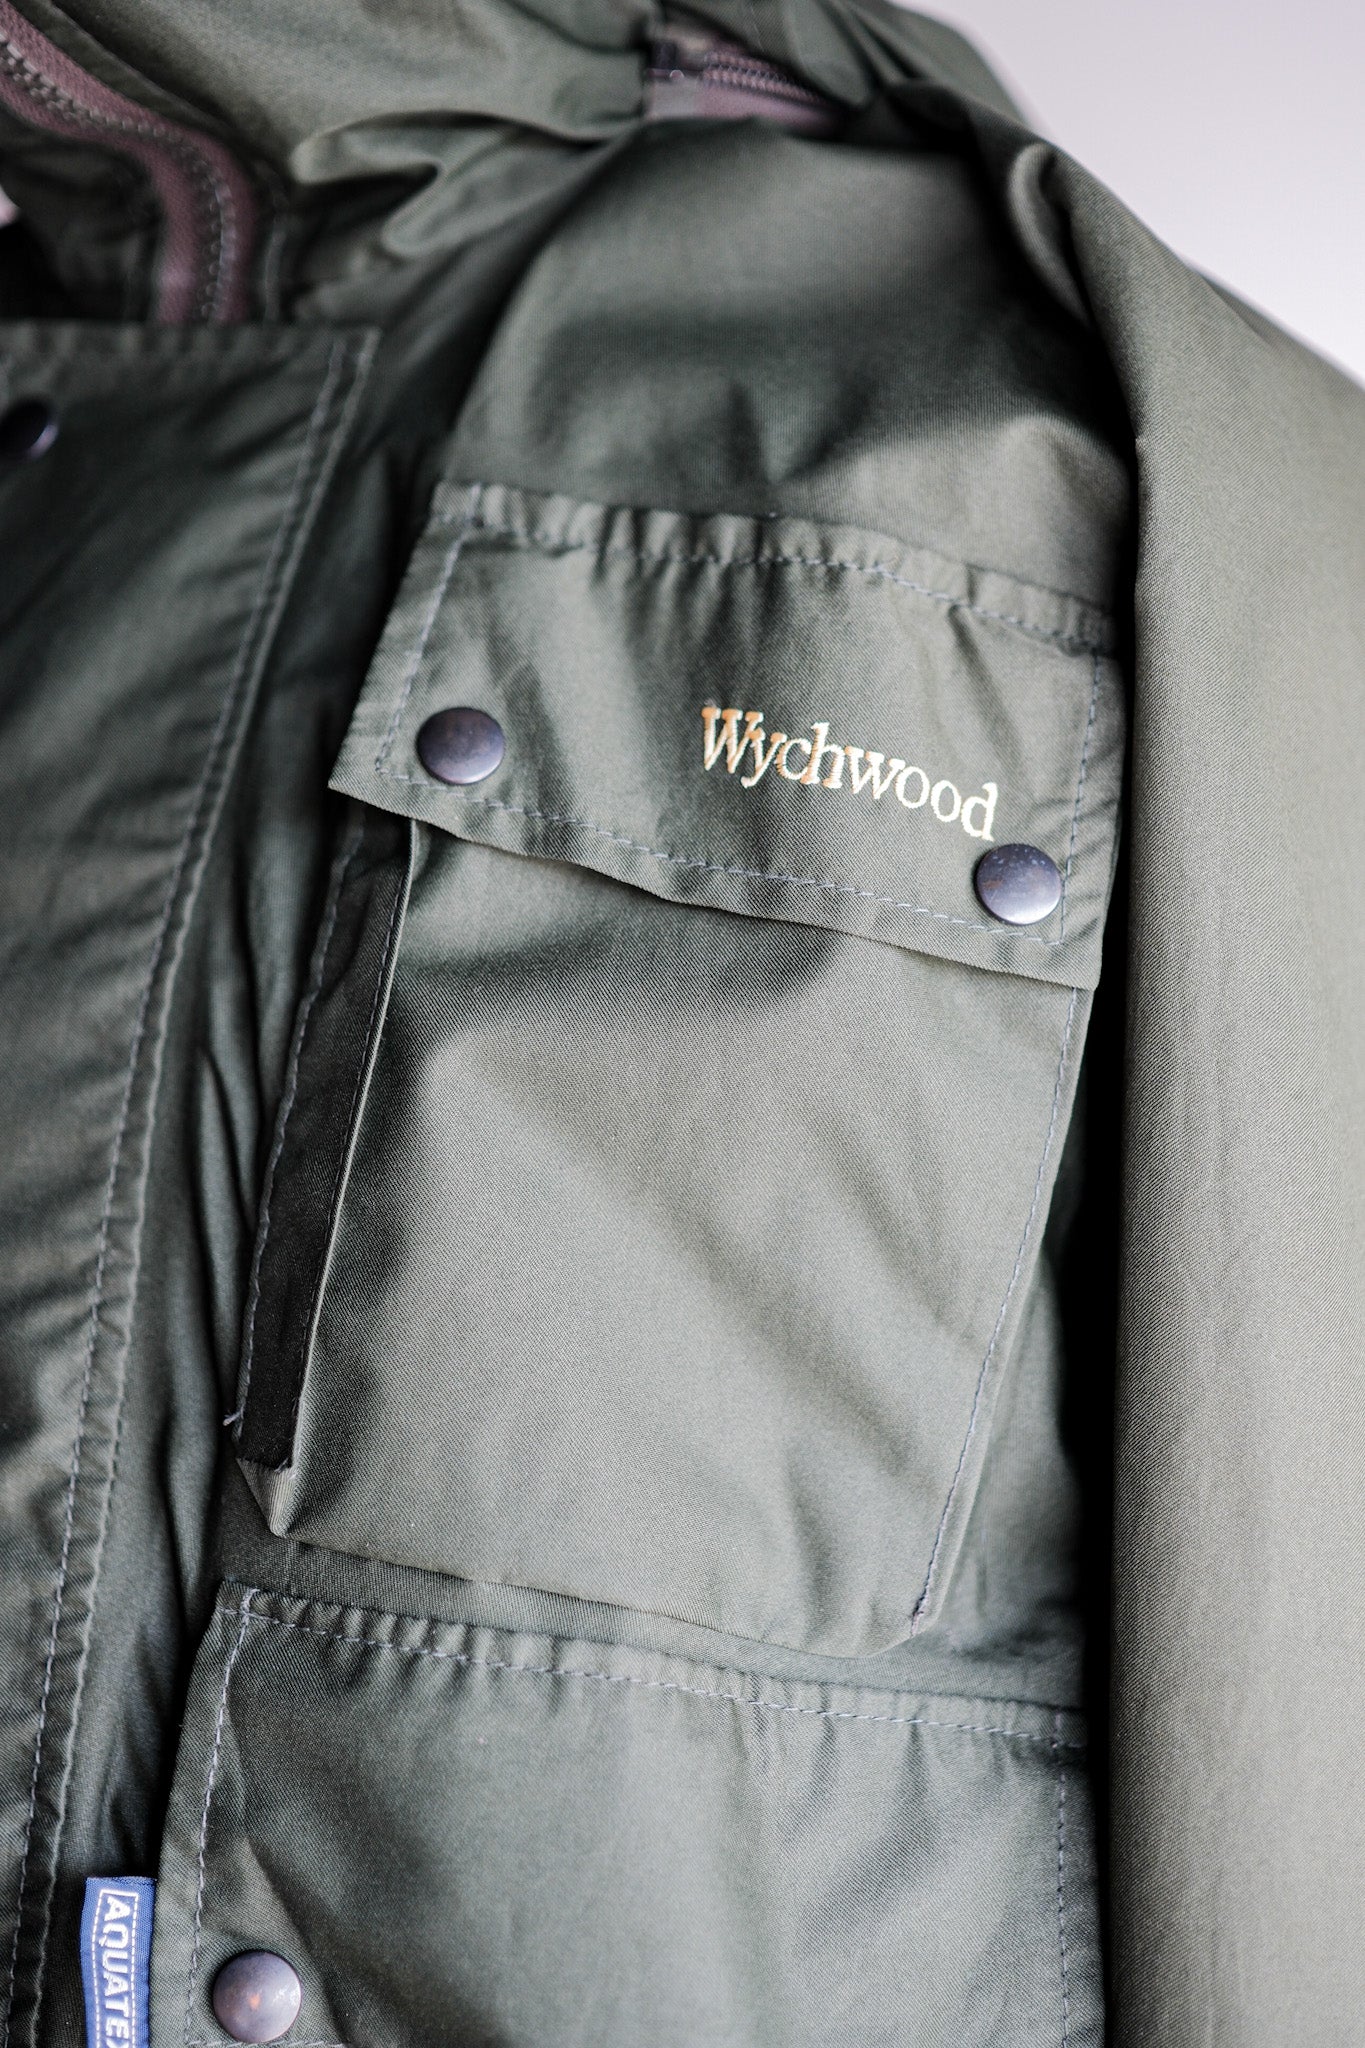 [~ 90's] British vintage aquatex pêche veste de veste.xl "wychwood"